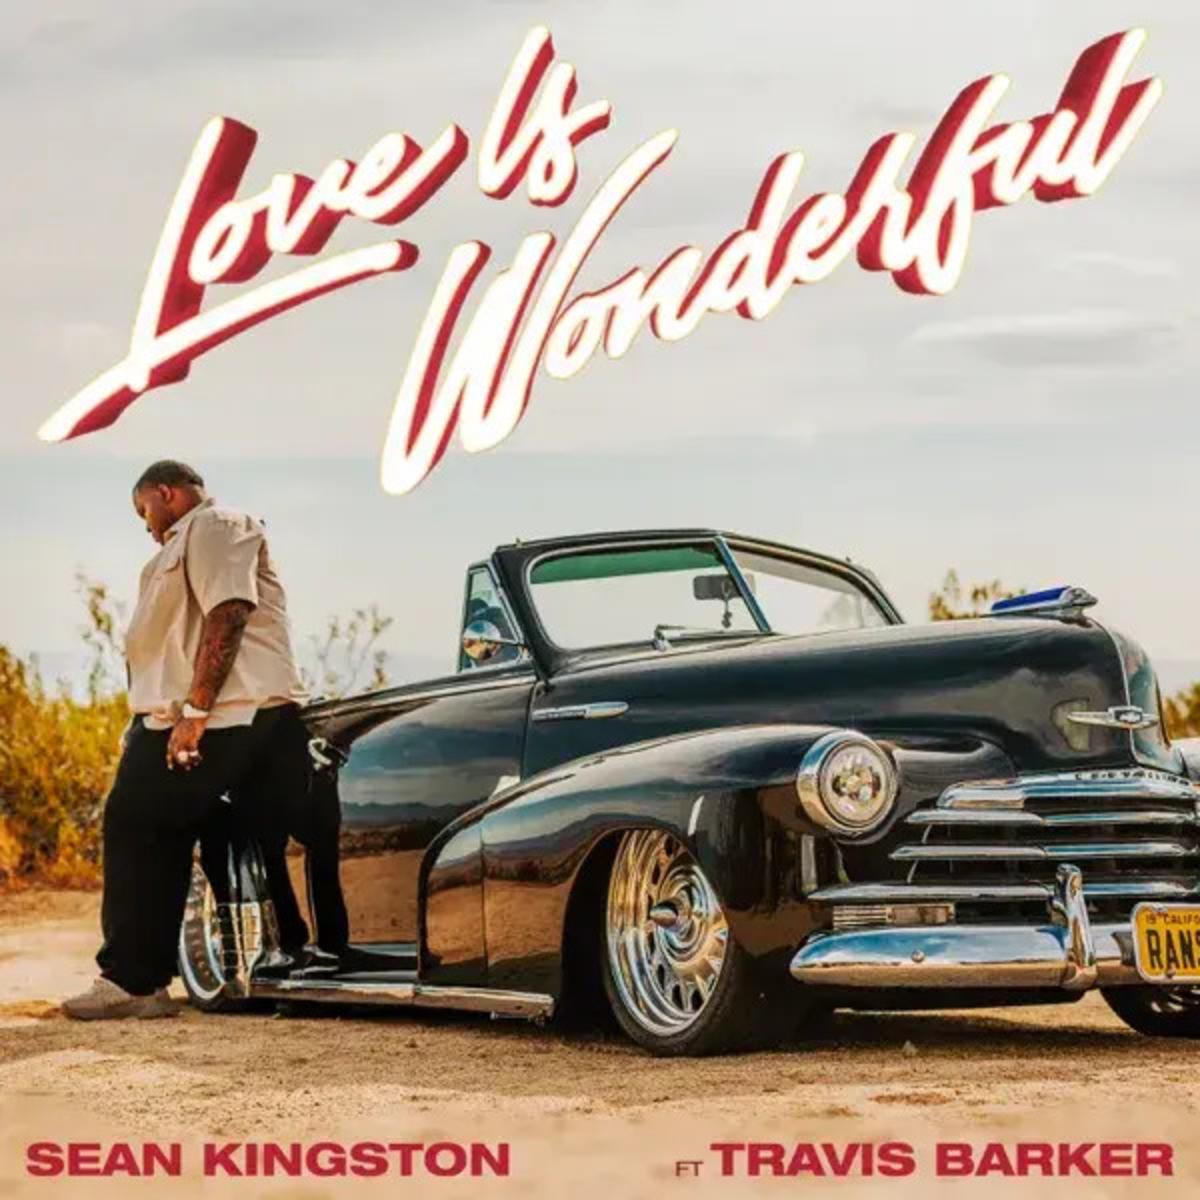 Sean Kingston Recruits Travis Barker For “Love Is Wonderful”